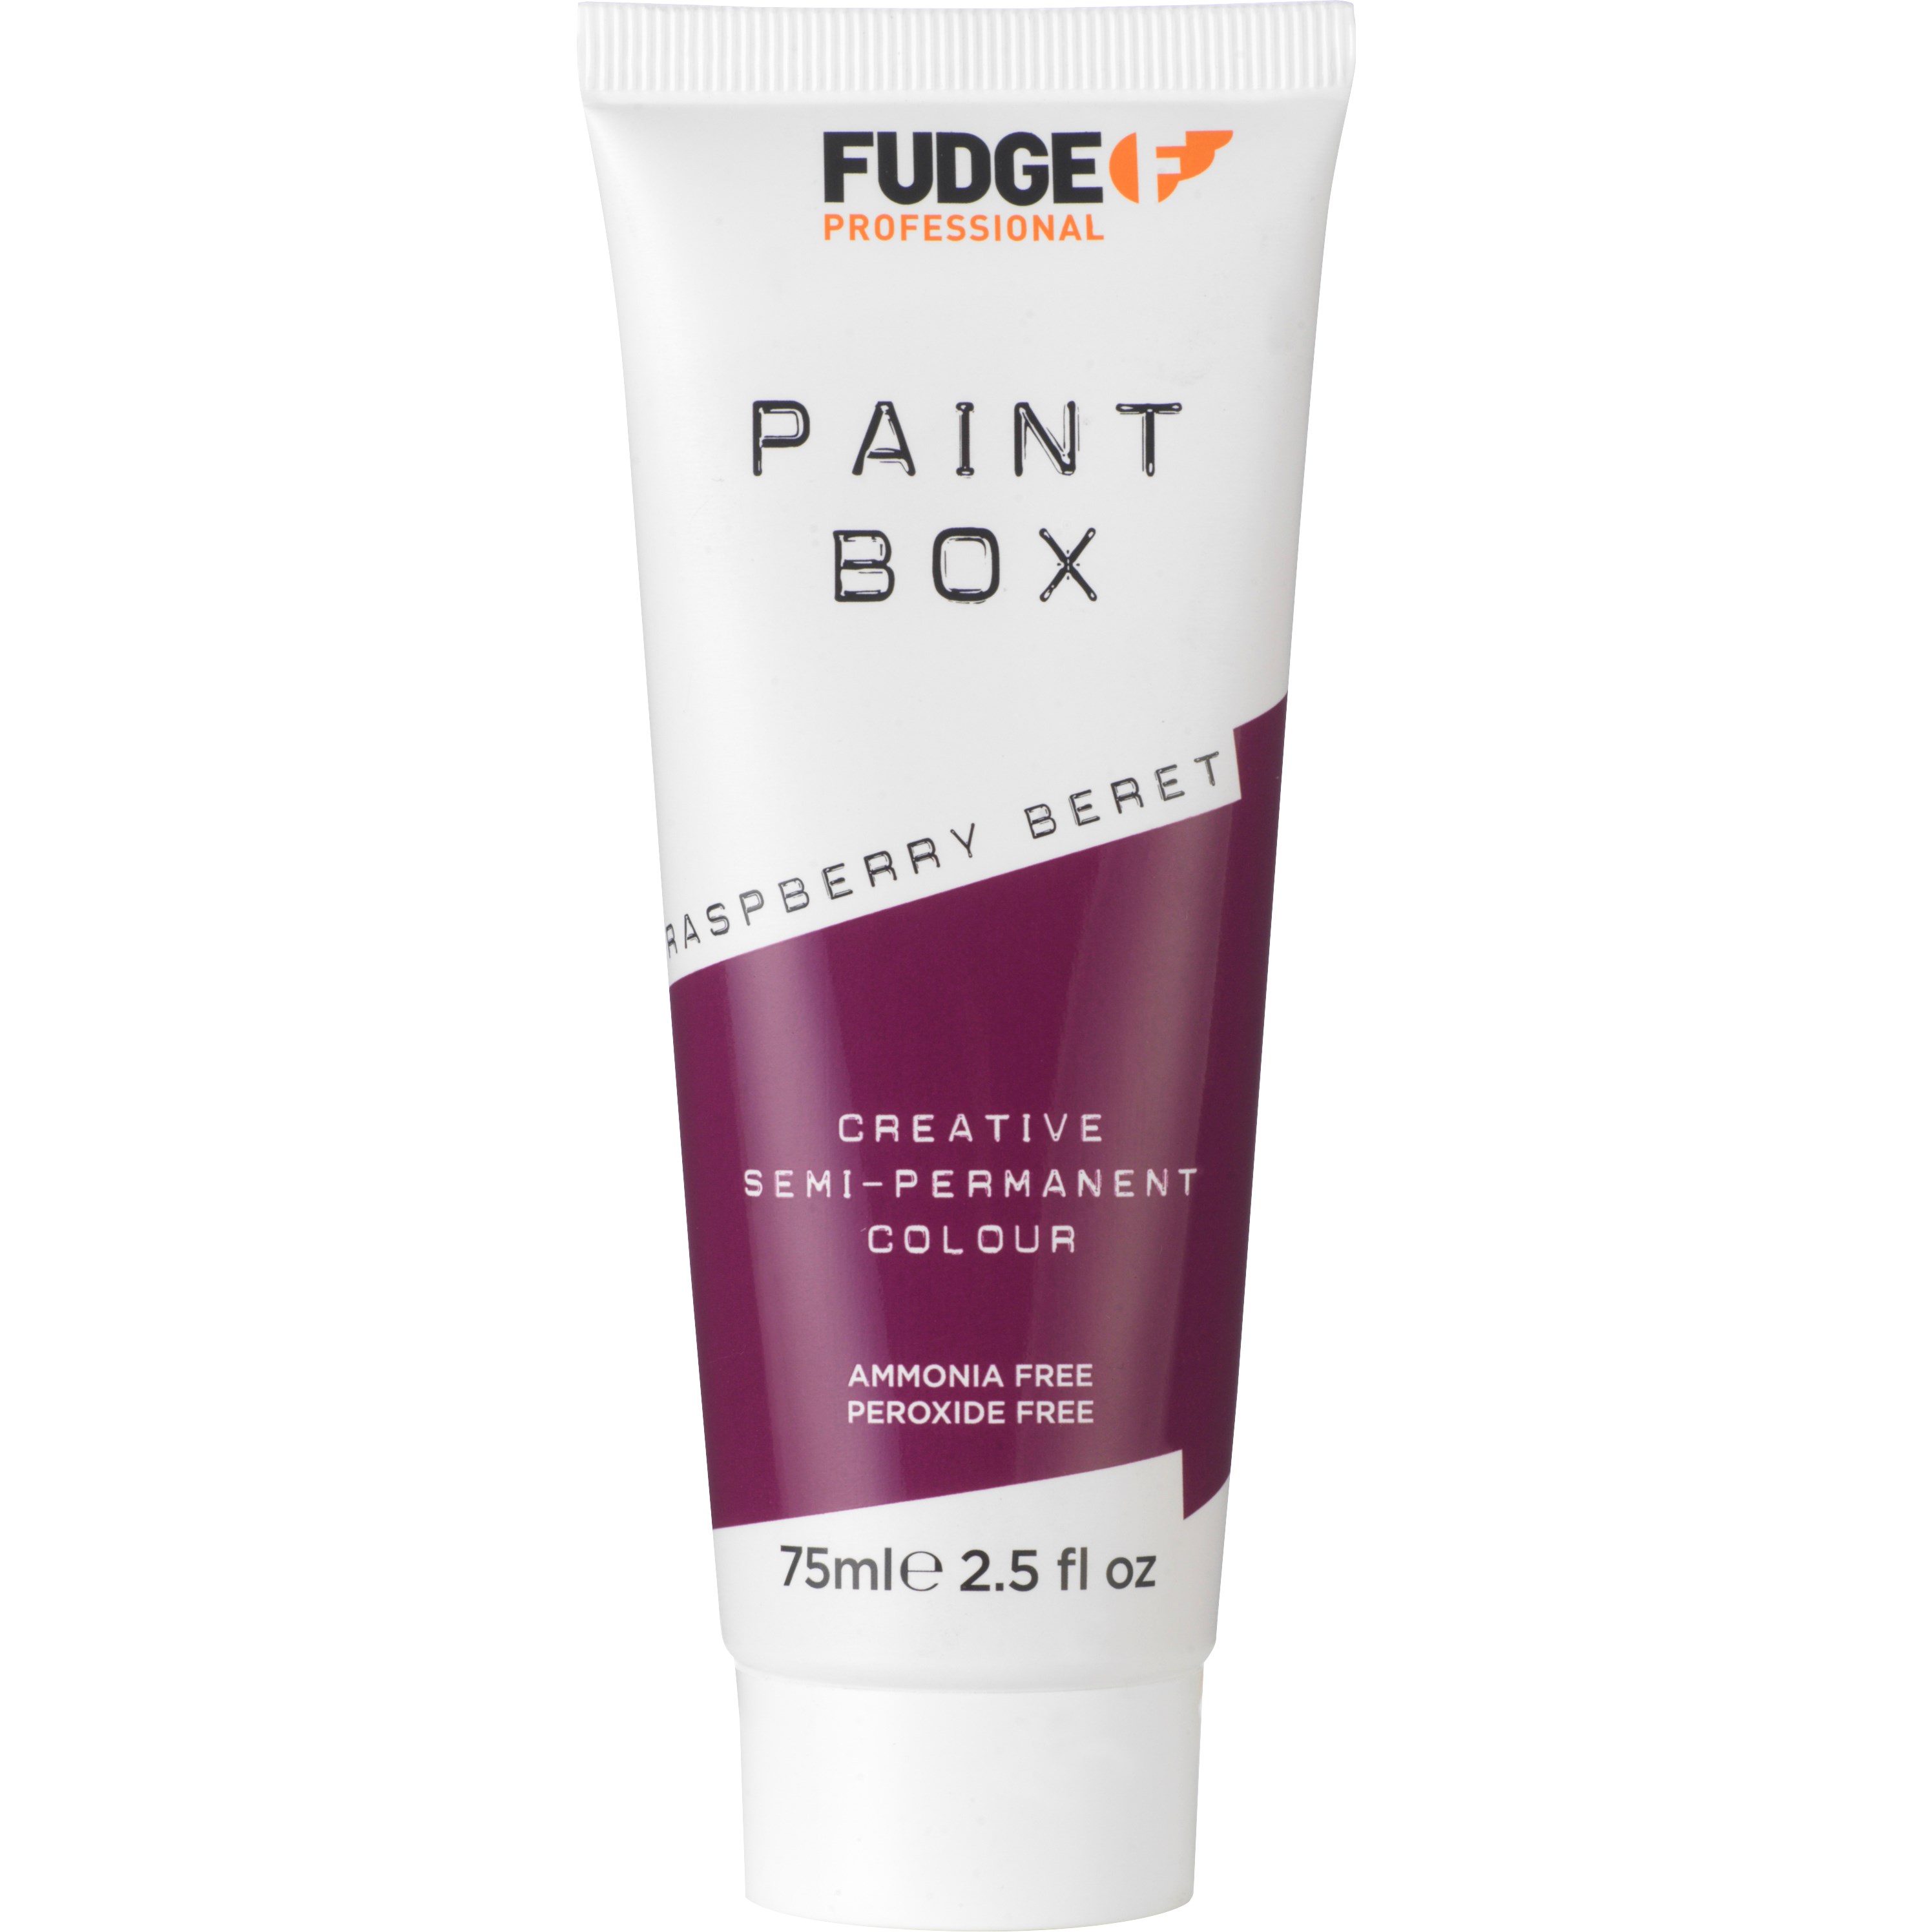 Läs mer om fudge Paintbox Rasberry Beret